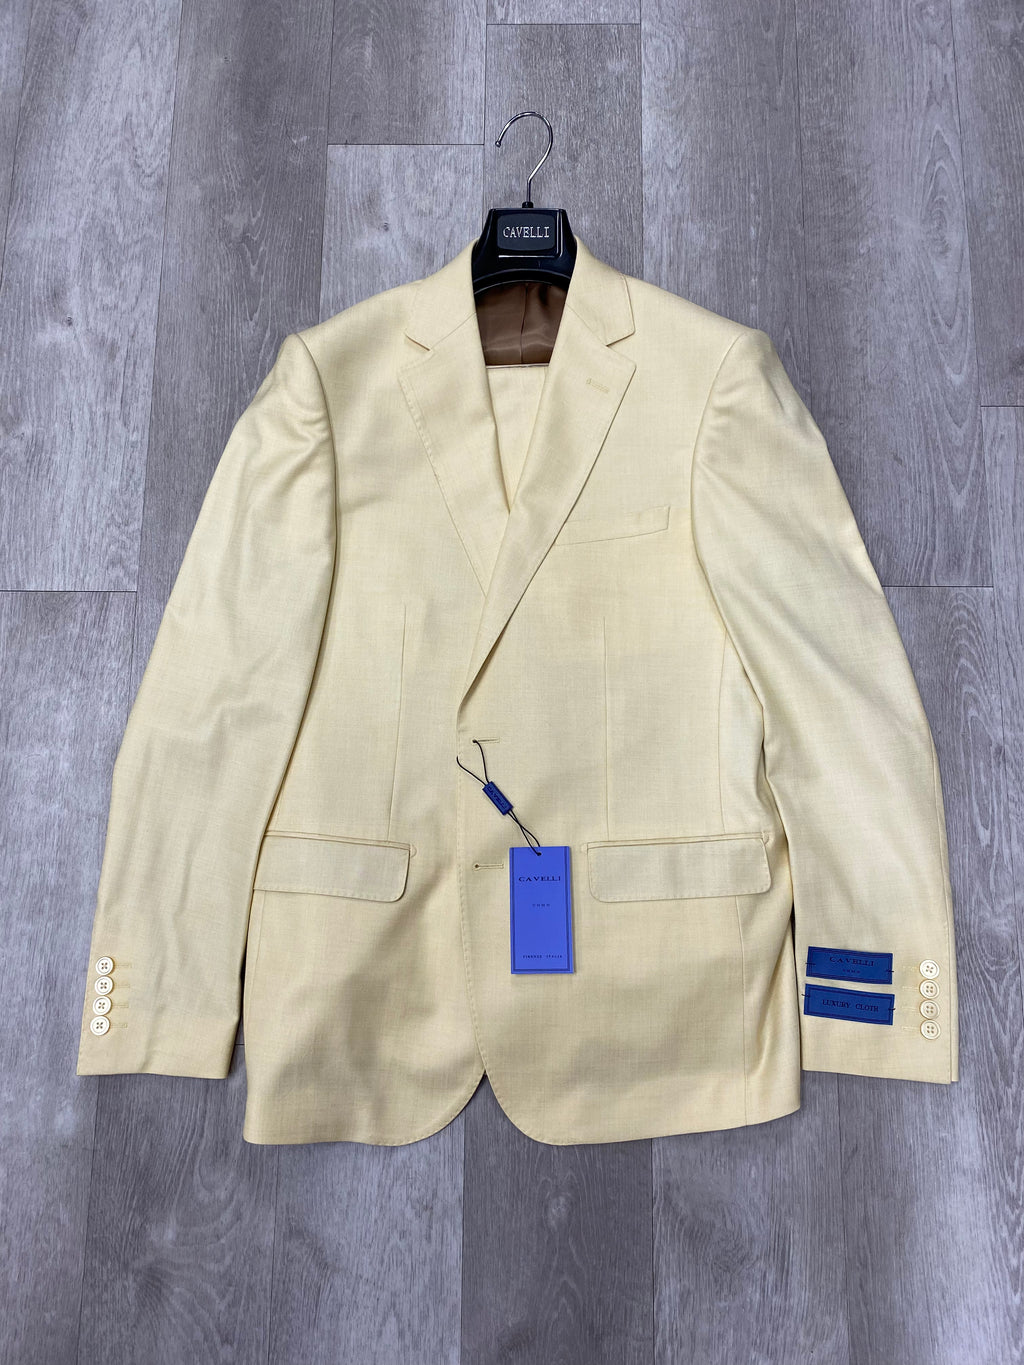 Cavelli Uomo Porto Slim Fit Suit 1986/21 Light Yellow